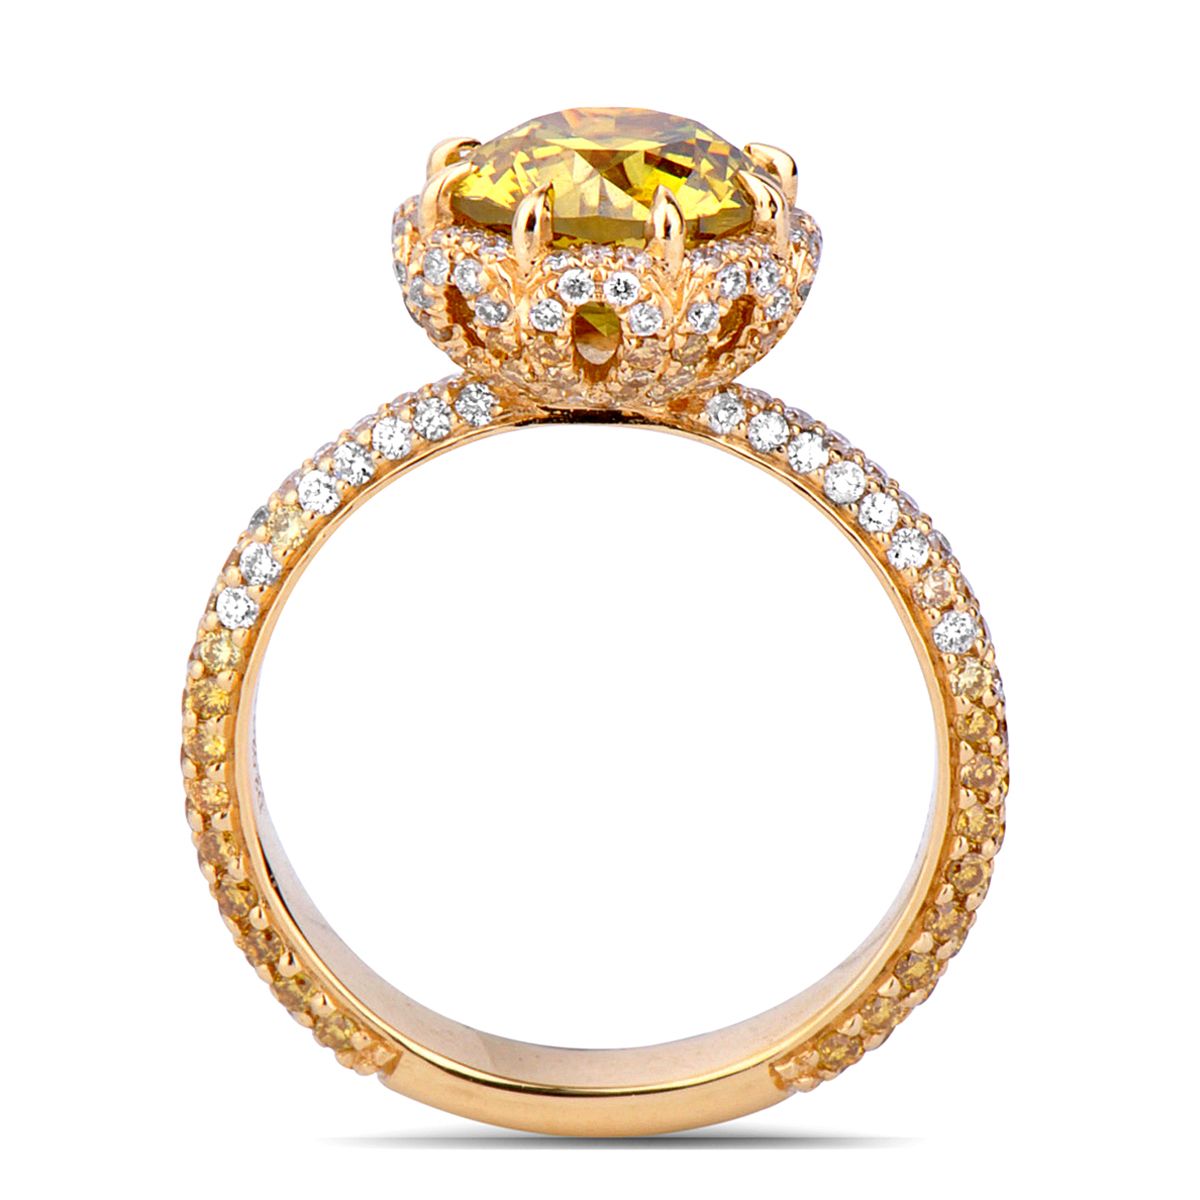 Fancy Deep Brownish Greenish Yellow Diamond Ring, 1.13 Carat, Round shape, GIA Certified, 2171905173